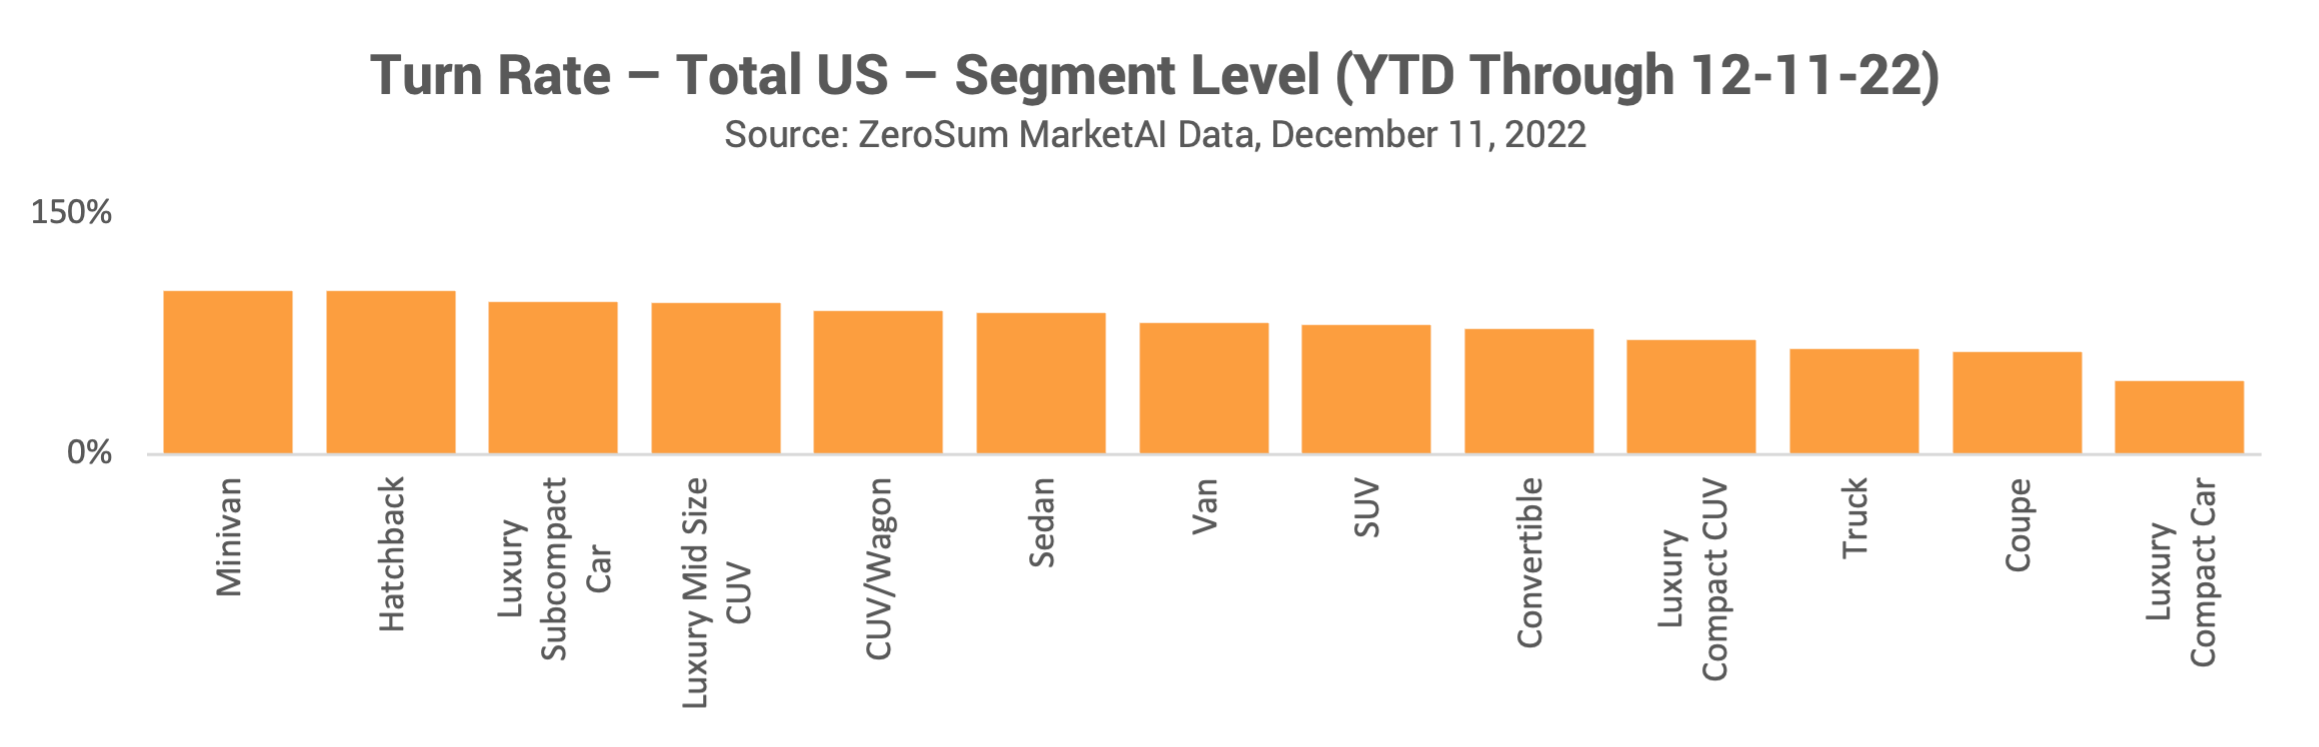 Turn Rate total US Segment Level